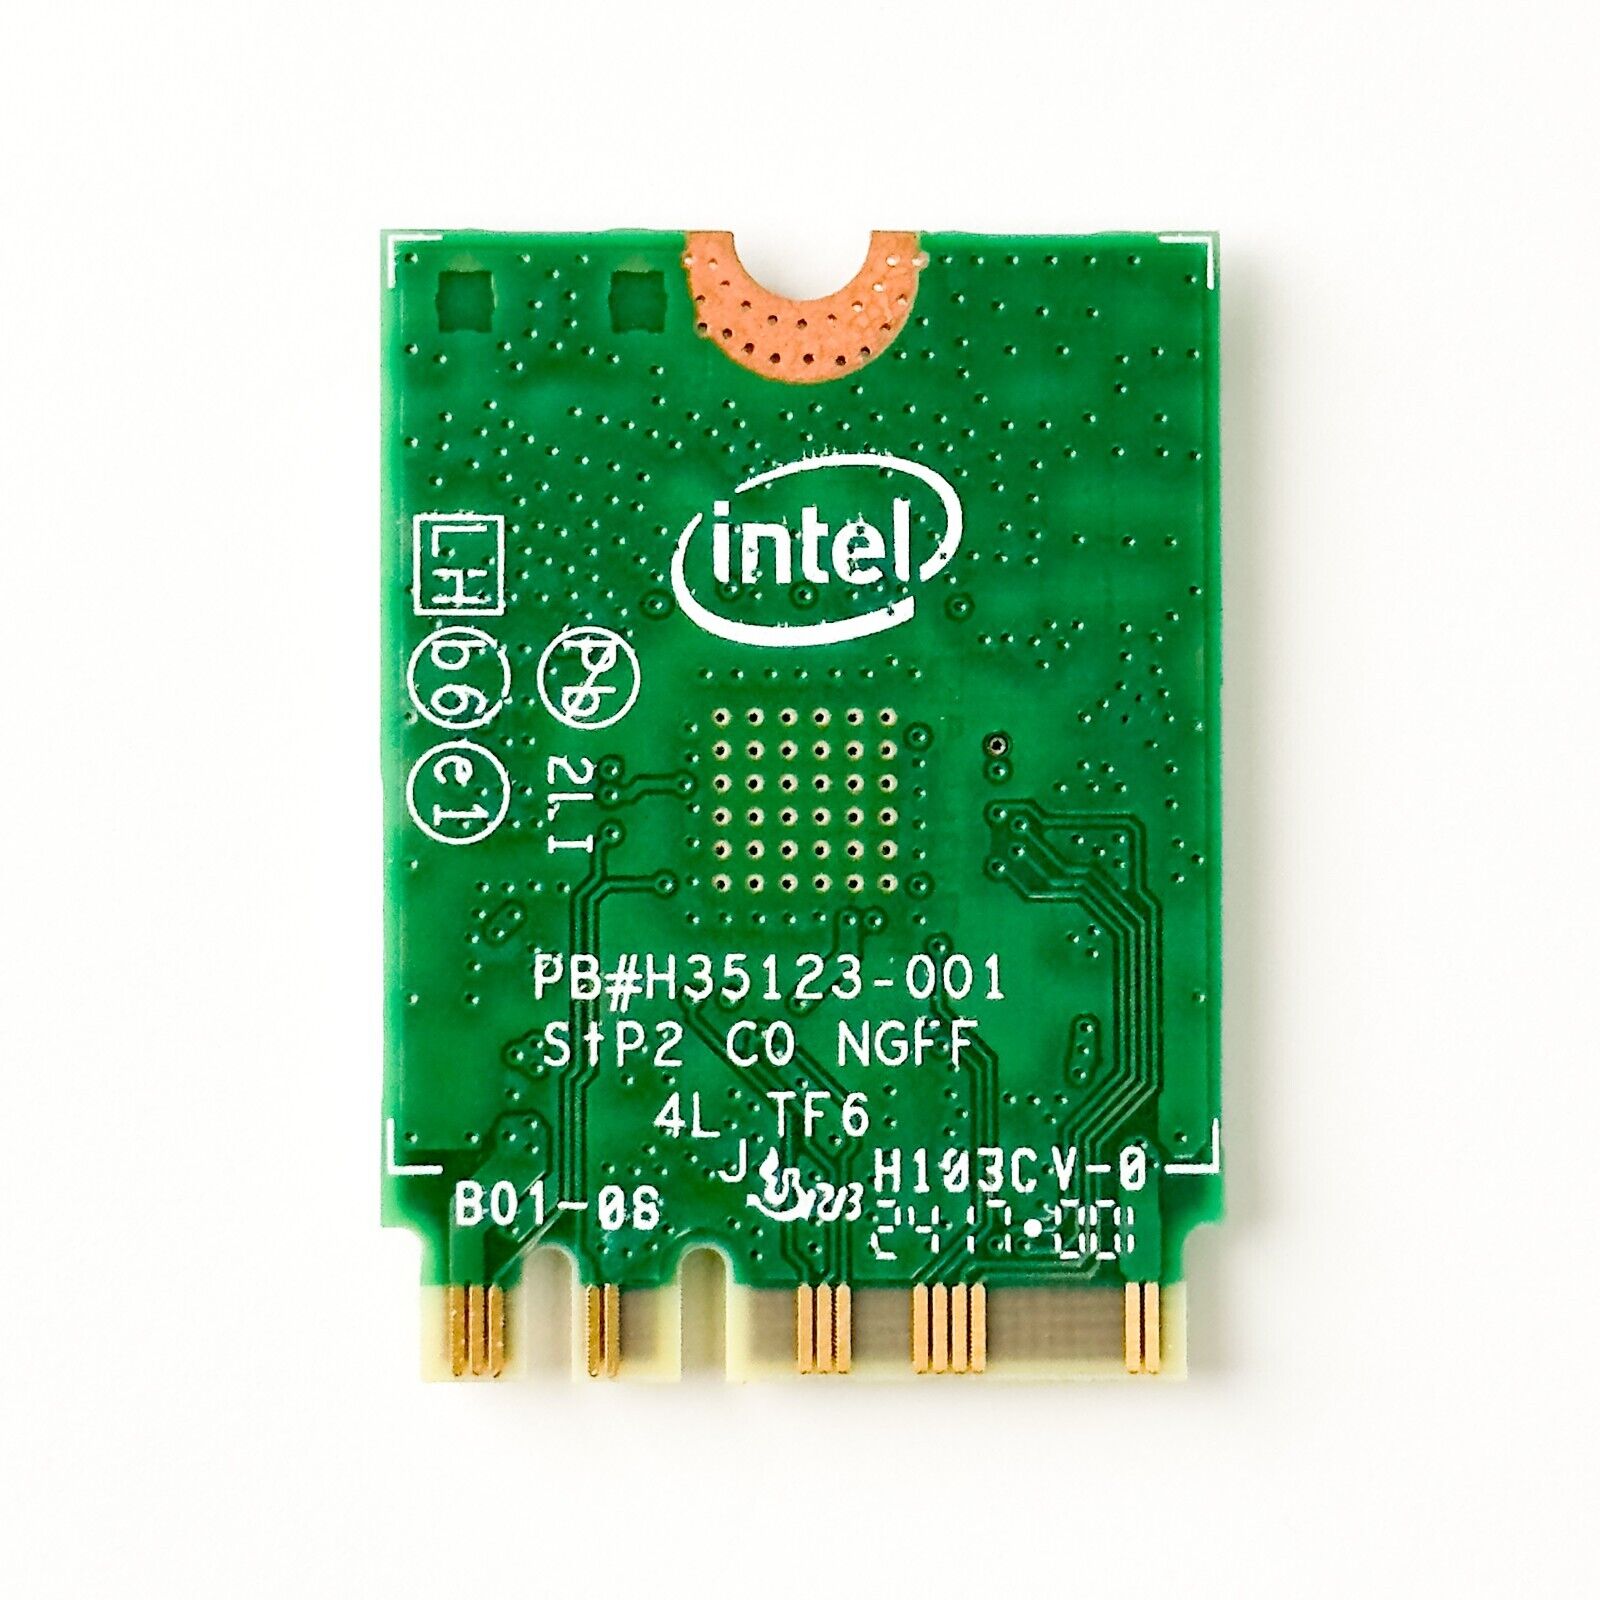 Intel Dual Band Wireless-AC 7265 802.11ac WiFi + Bluetooth Card (7265NGW)